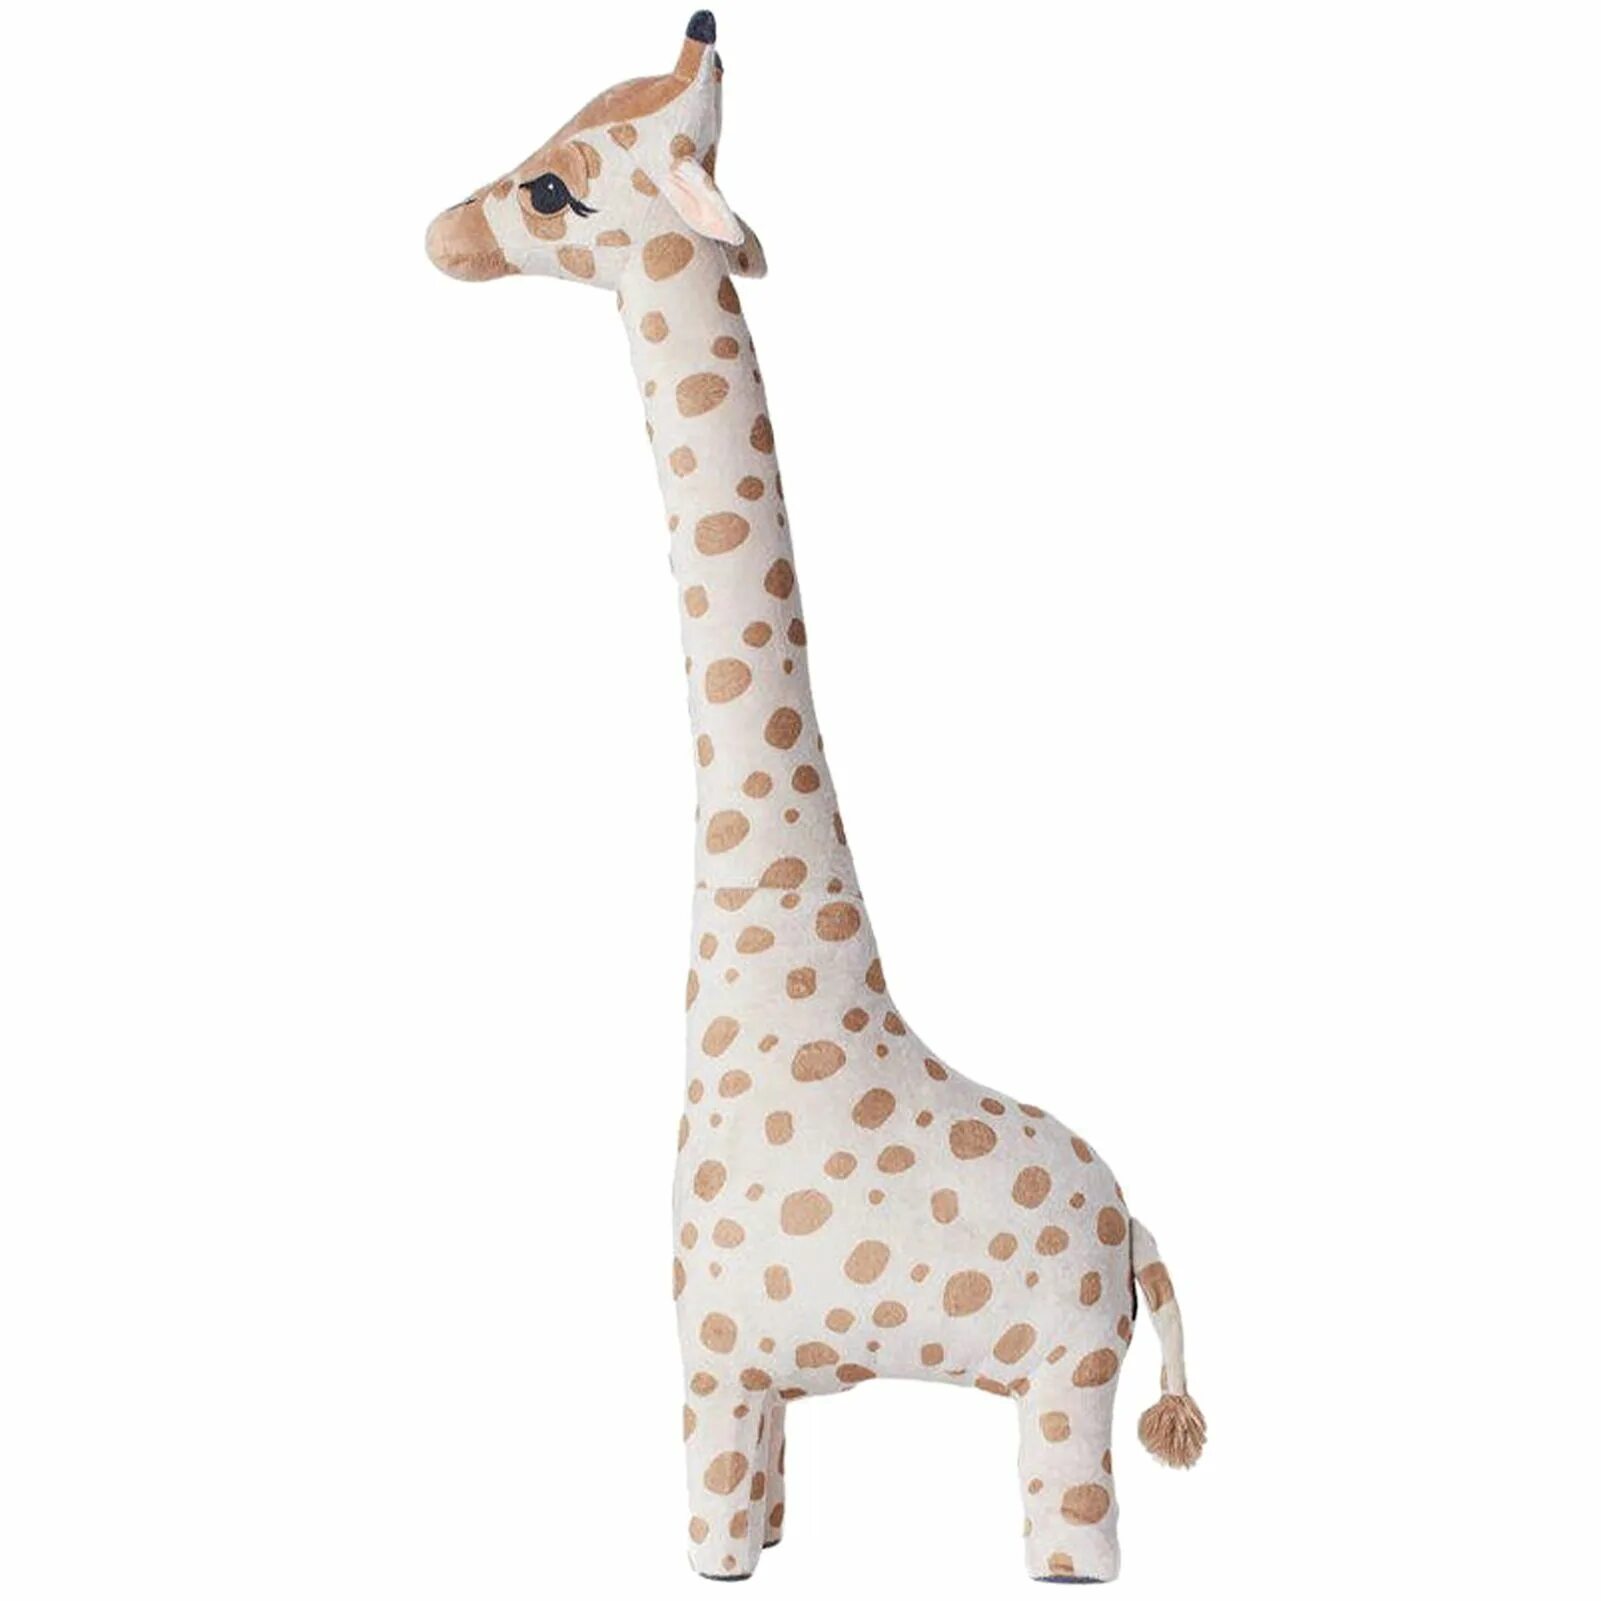 Купить жирафа игрушку. Игрушка Жираф икеа. Мягкая игрушка Жираф большой 140см. Жираф HM игрушка. HM Home Жираф игрушка.